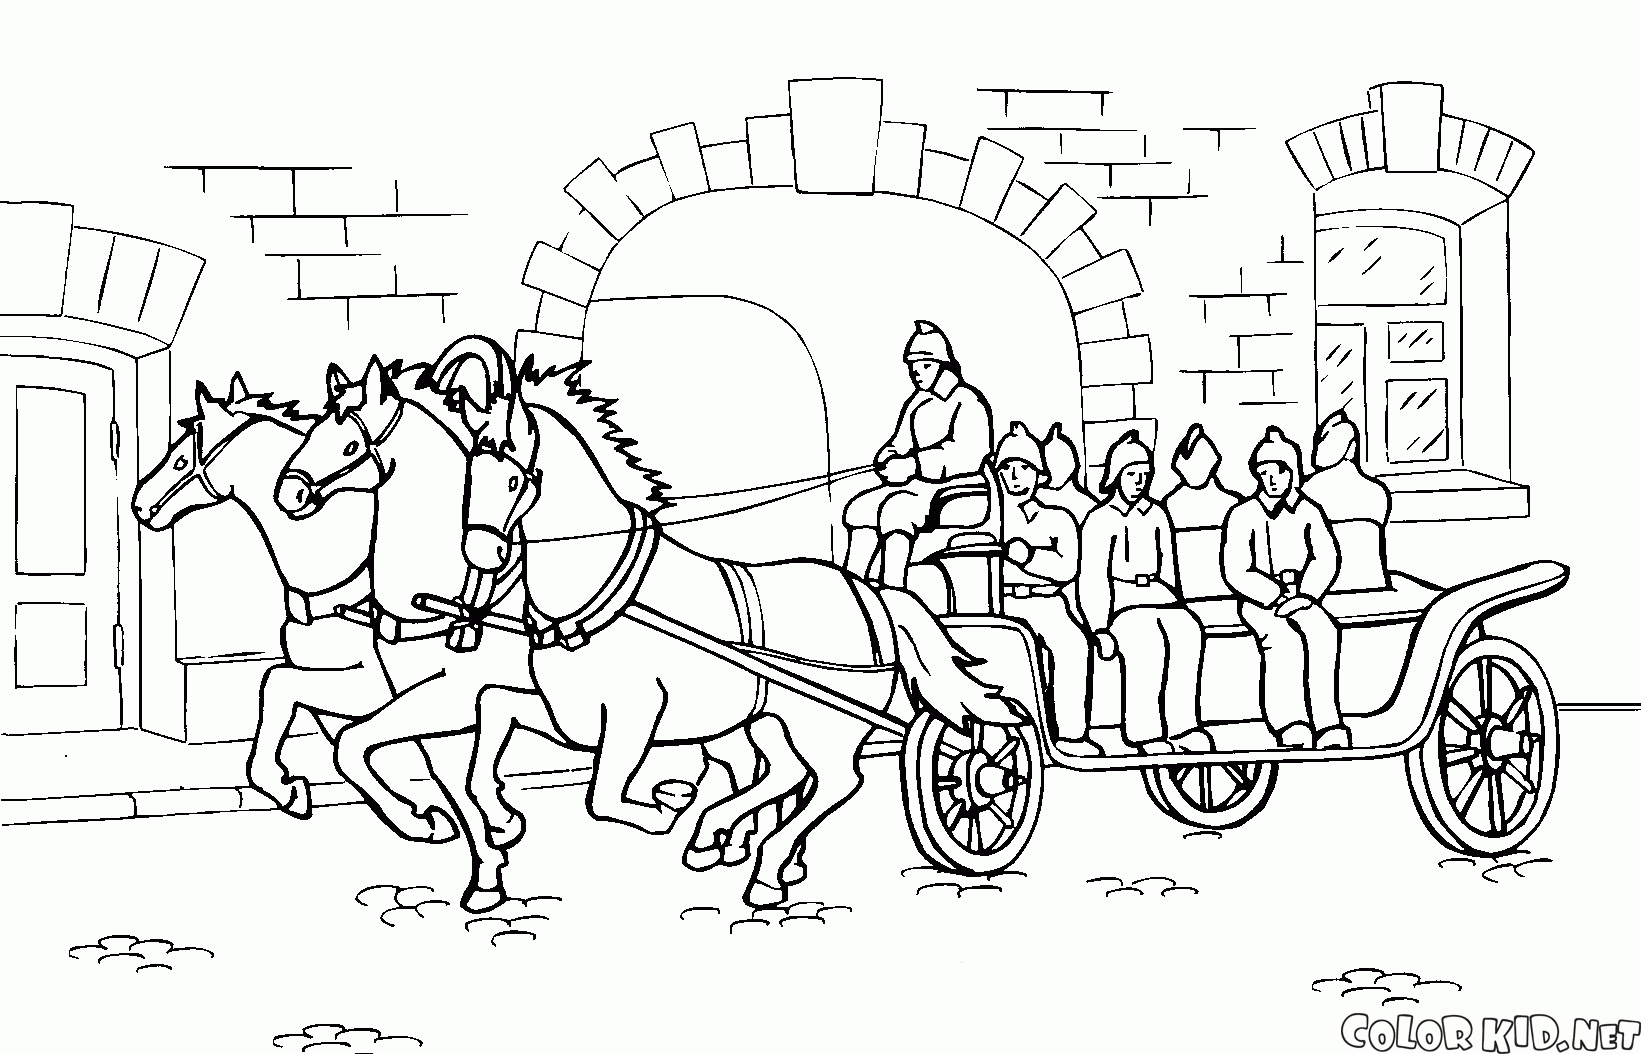 At arabası